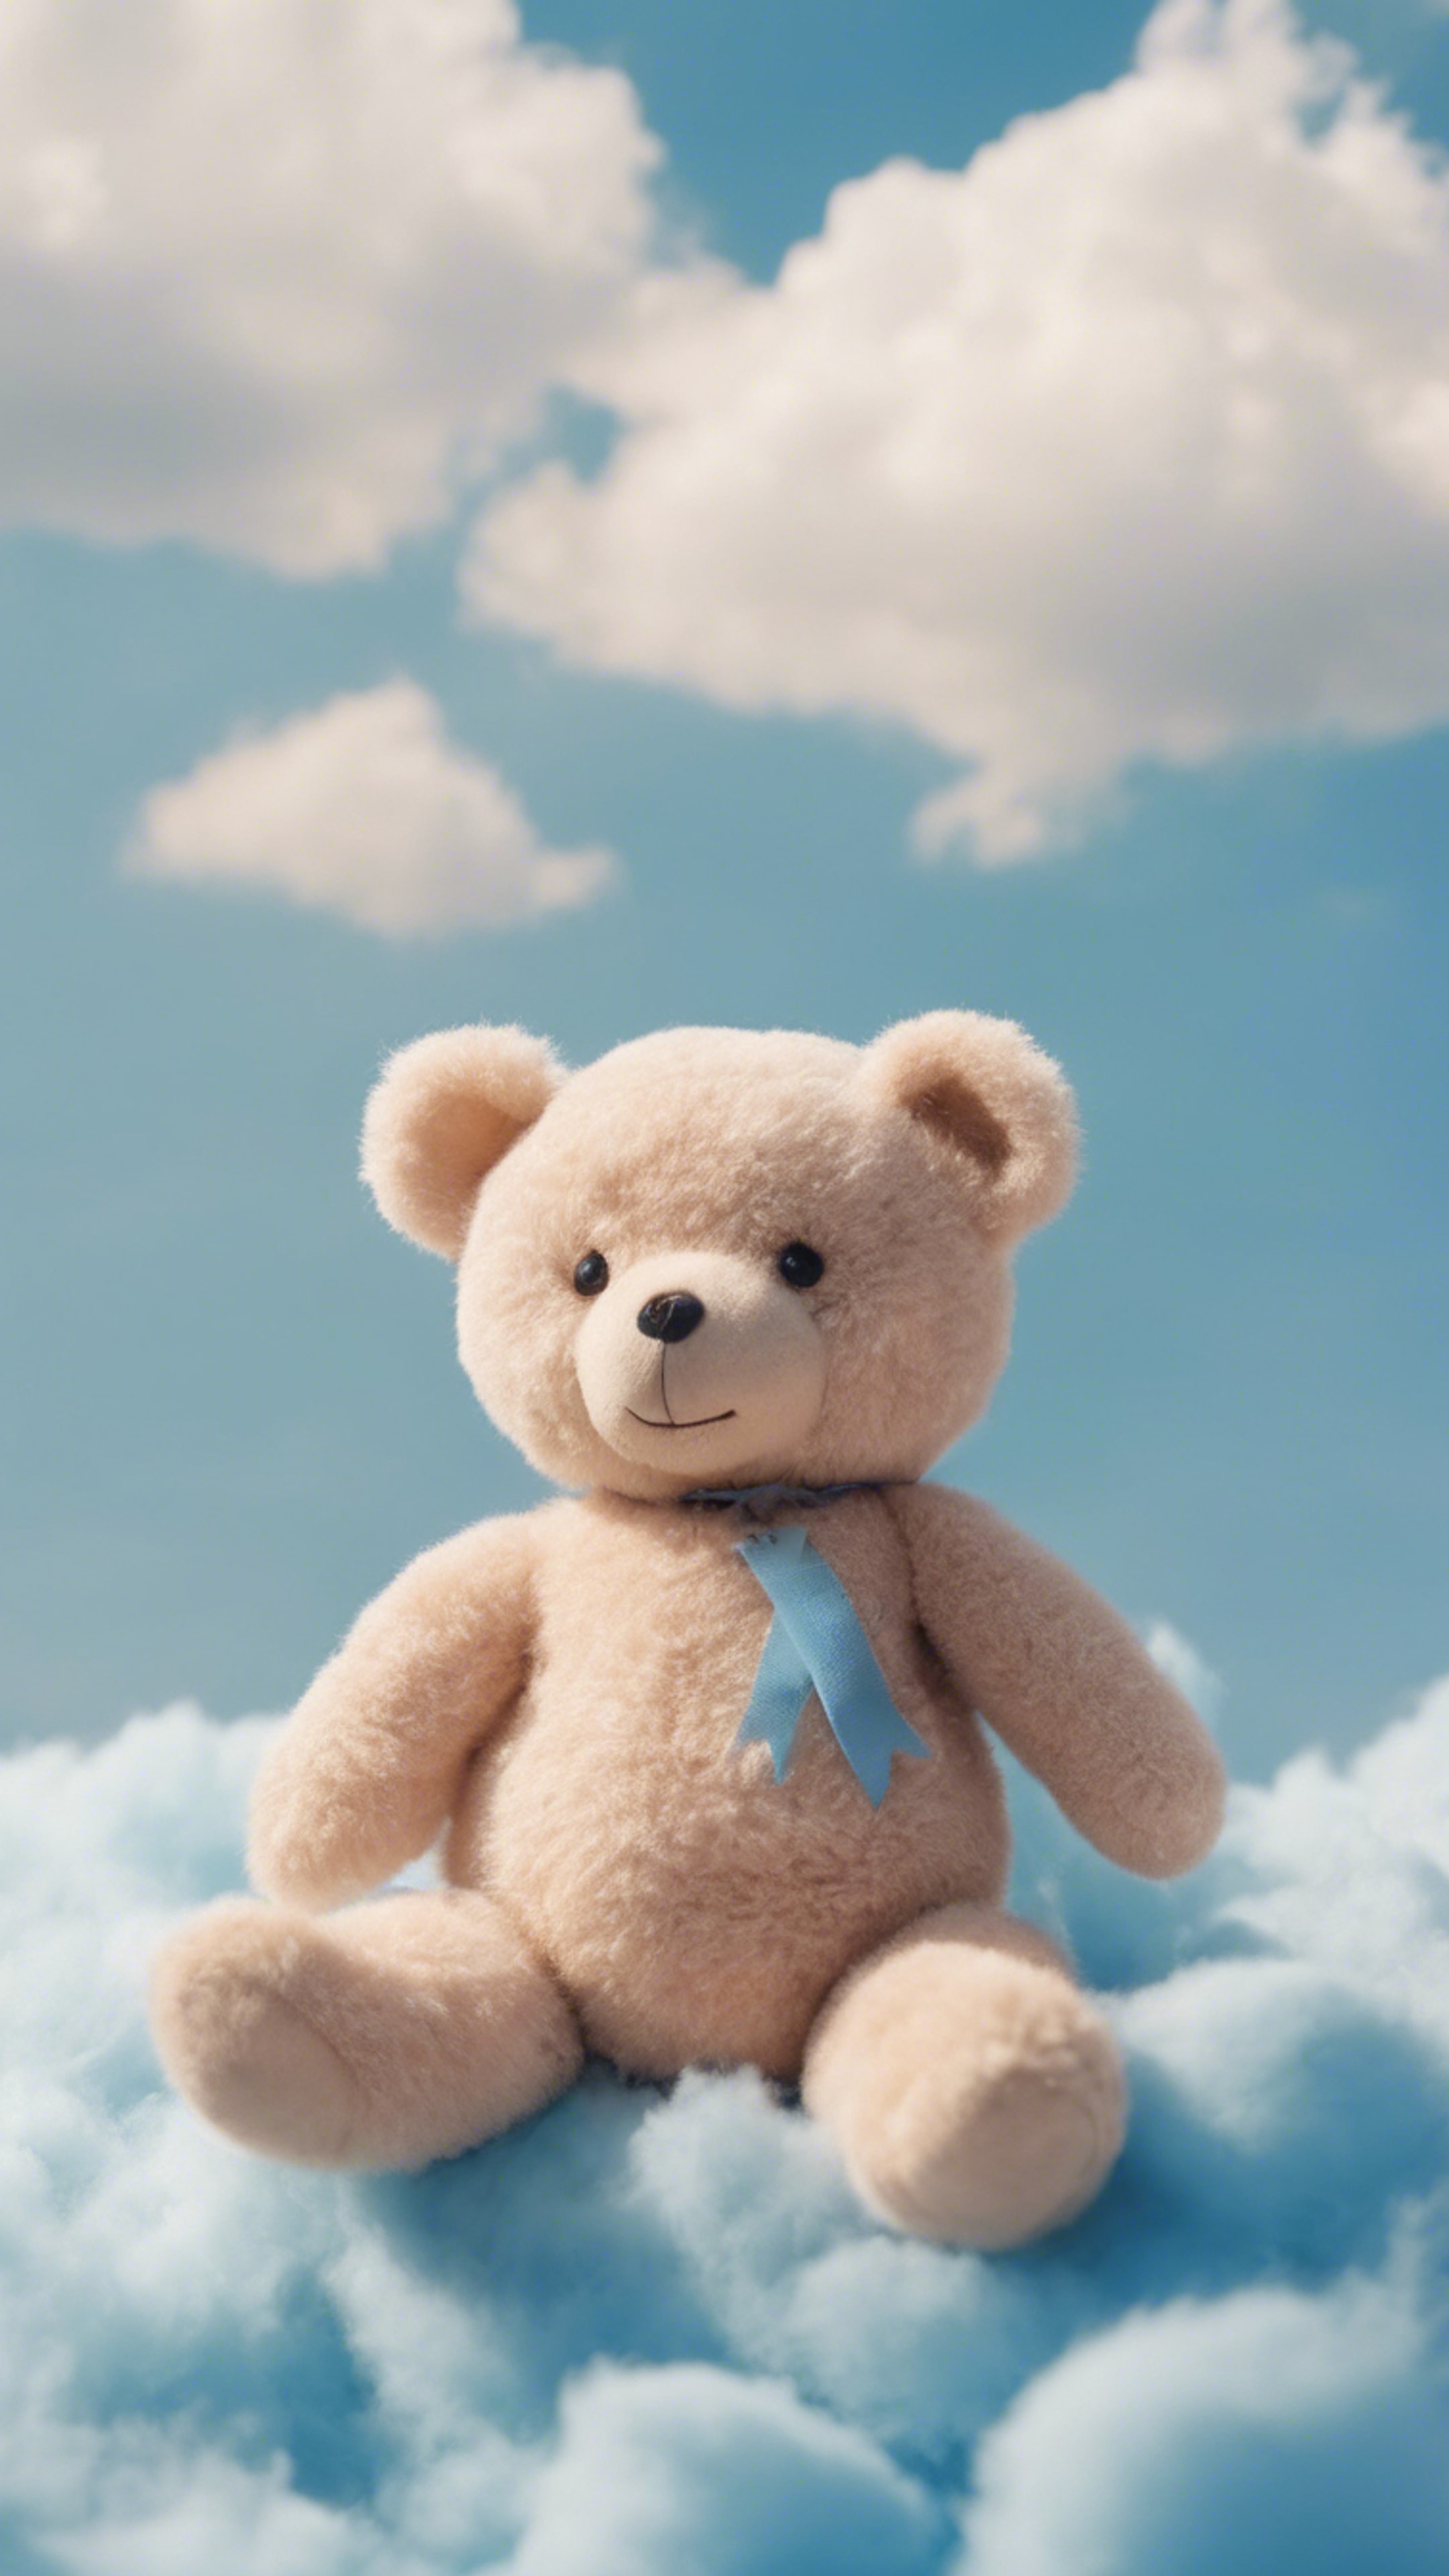 A kawaii beige teddy bear sitting on a soft fluffy cloud in a blue sky. Tapetai[56112c47d15a43519872]